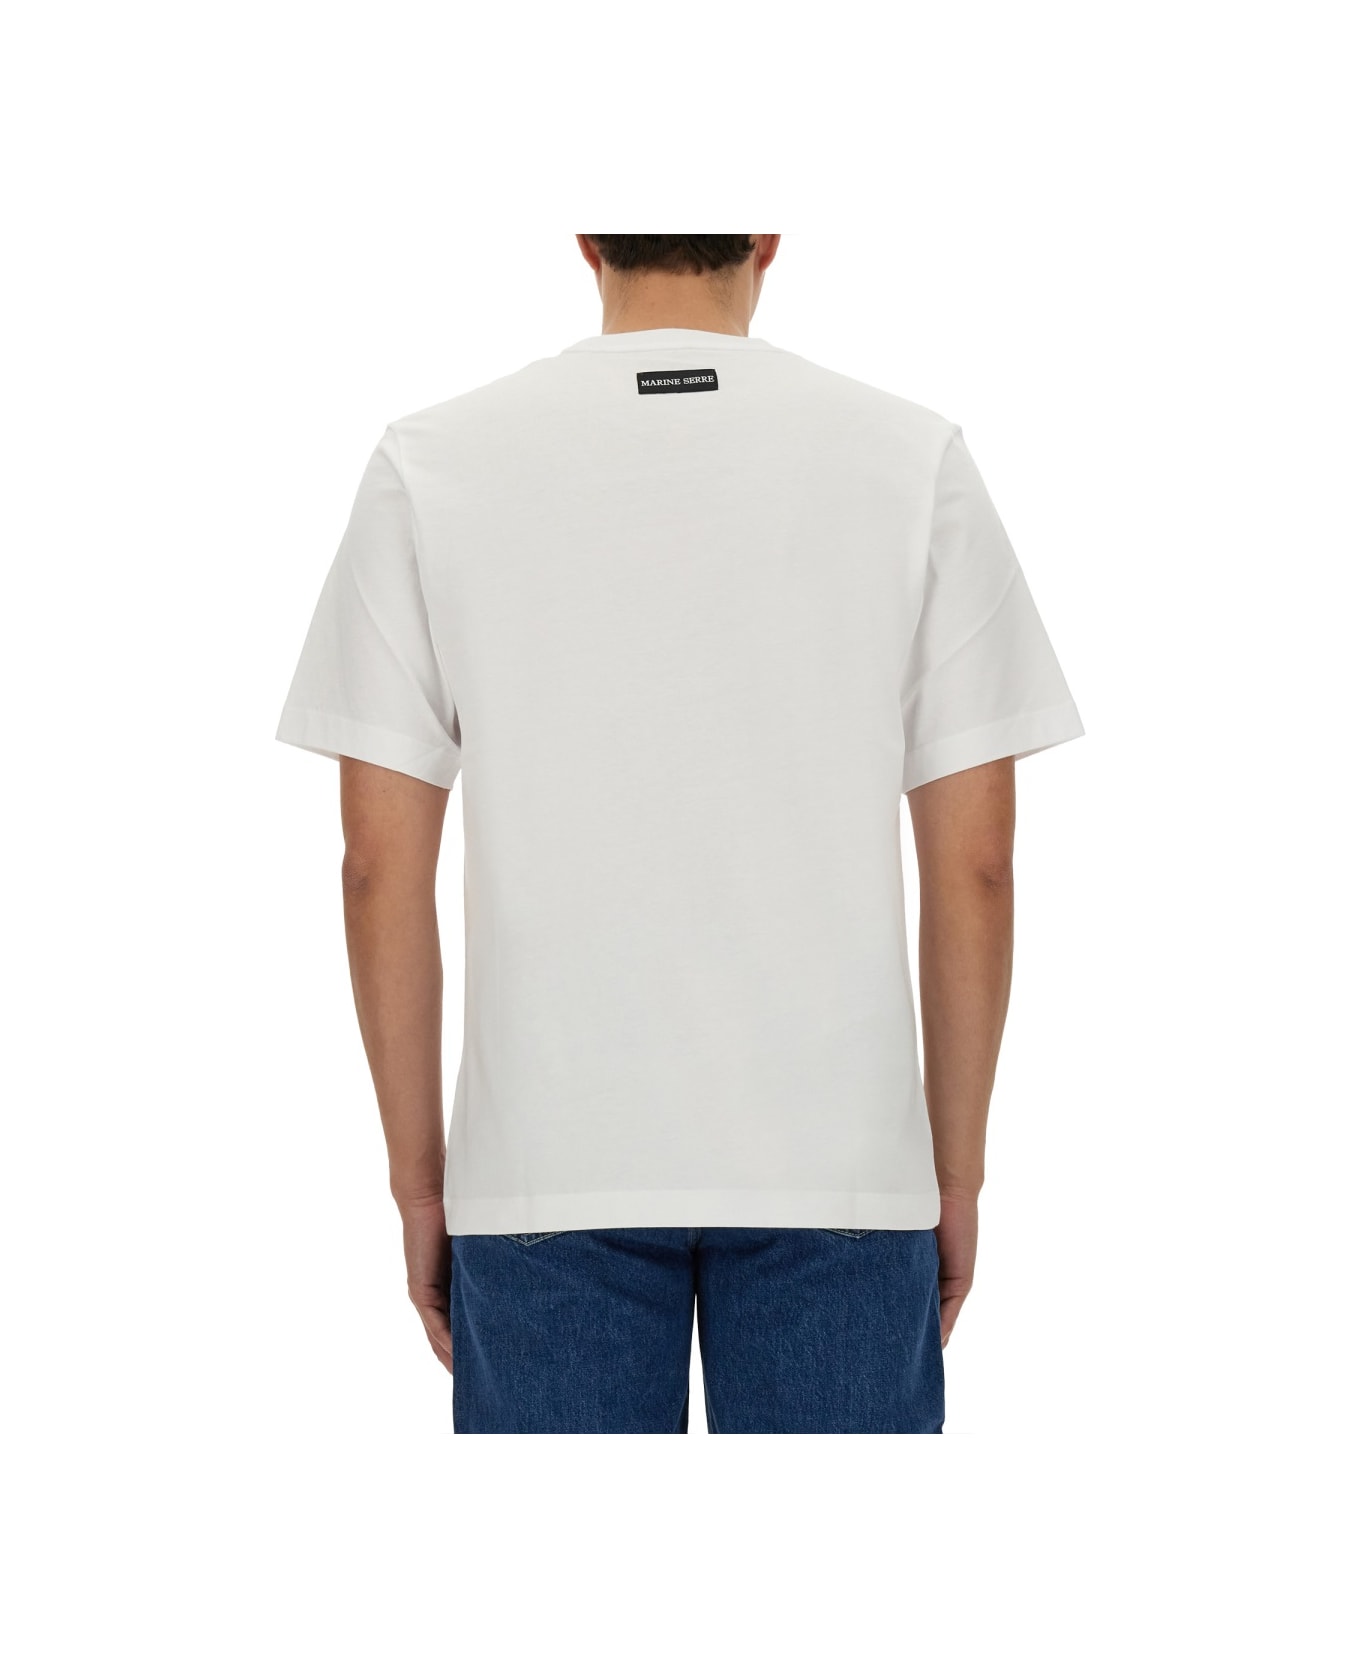 Marine Serre Cotton T-shirt - WHITE